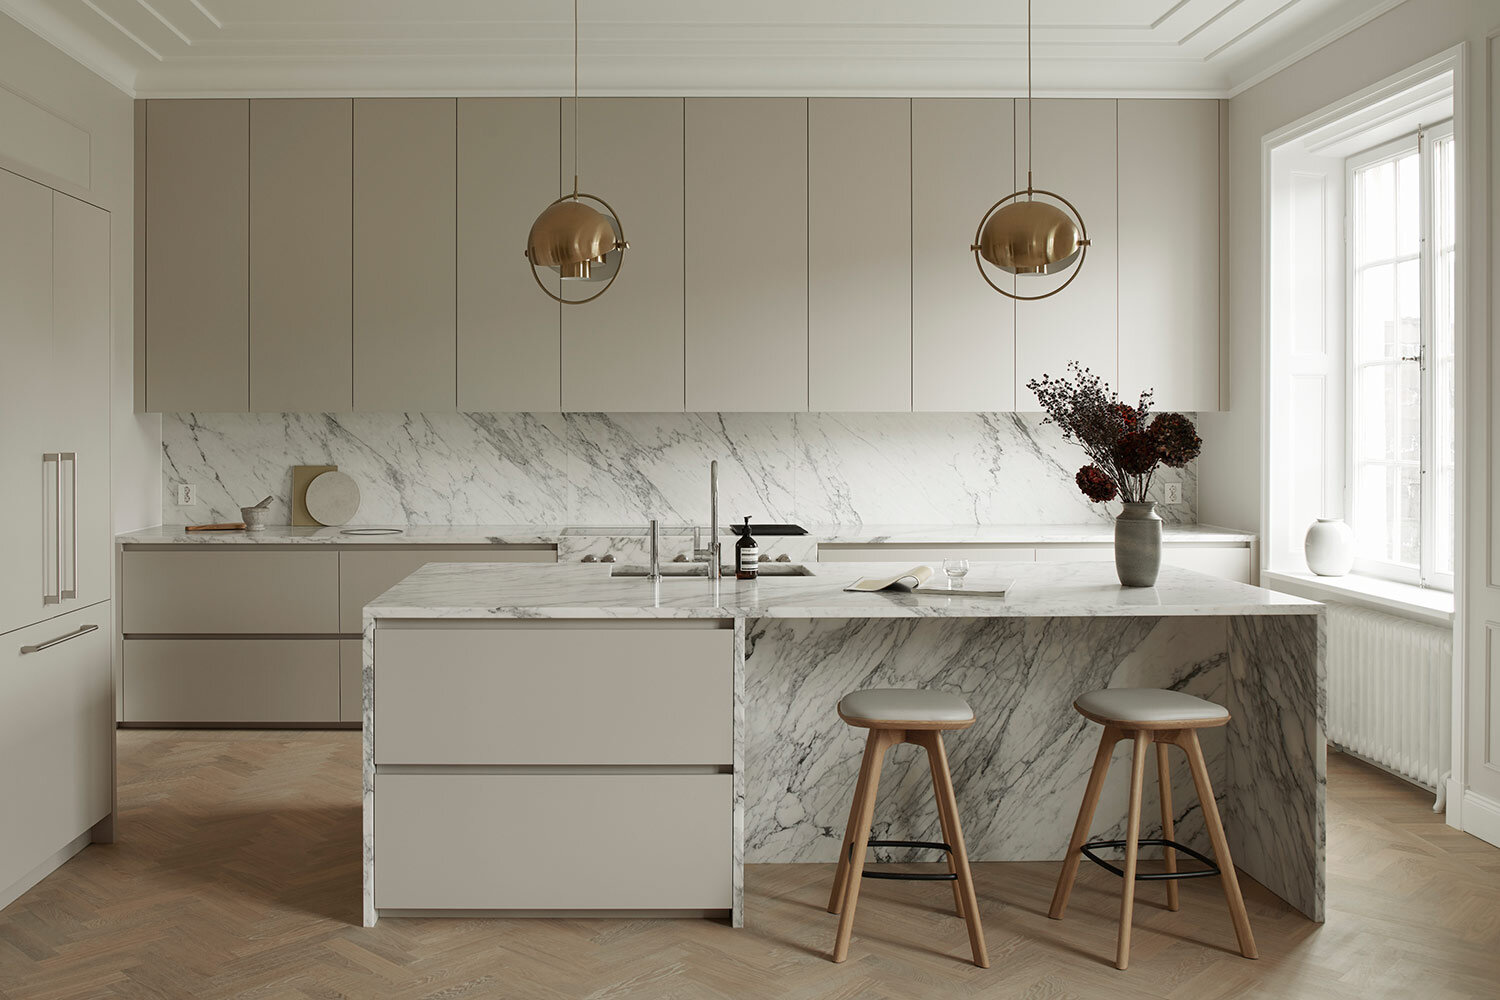 The nordic design kitchen — Nordiska Kök